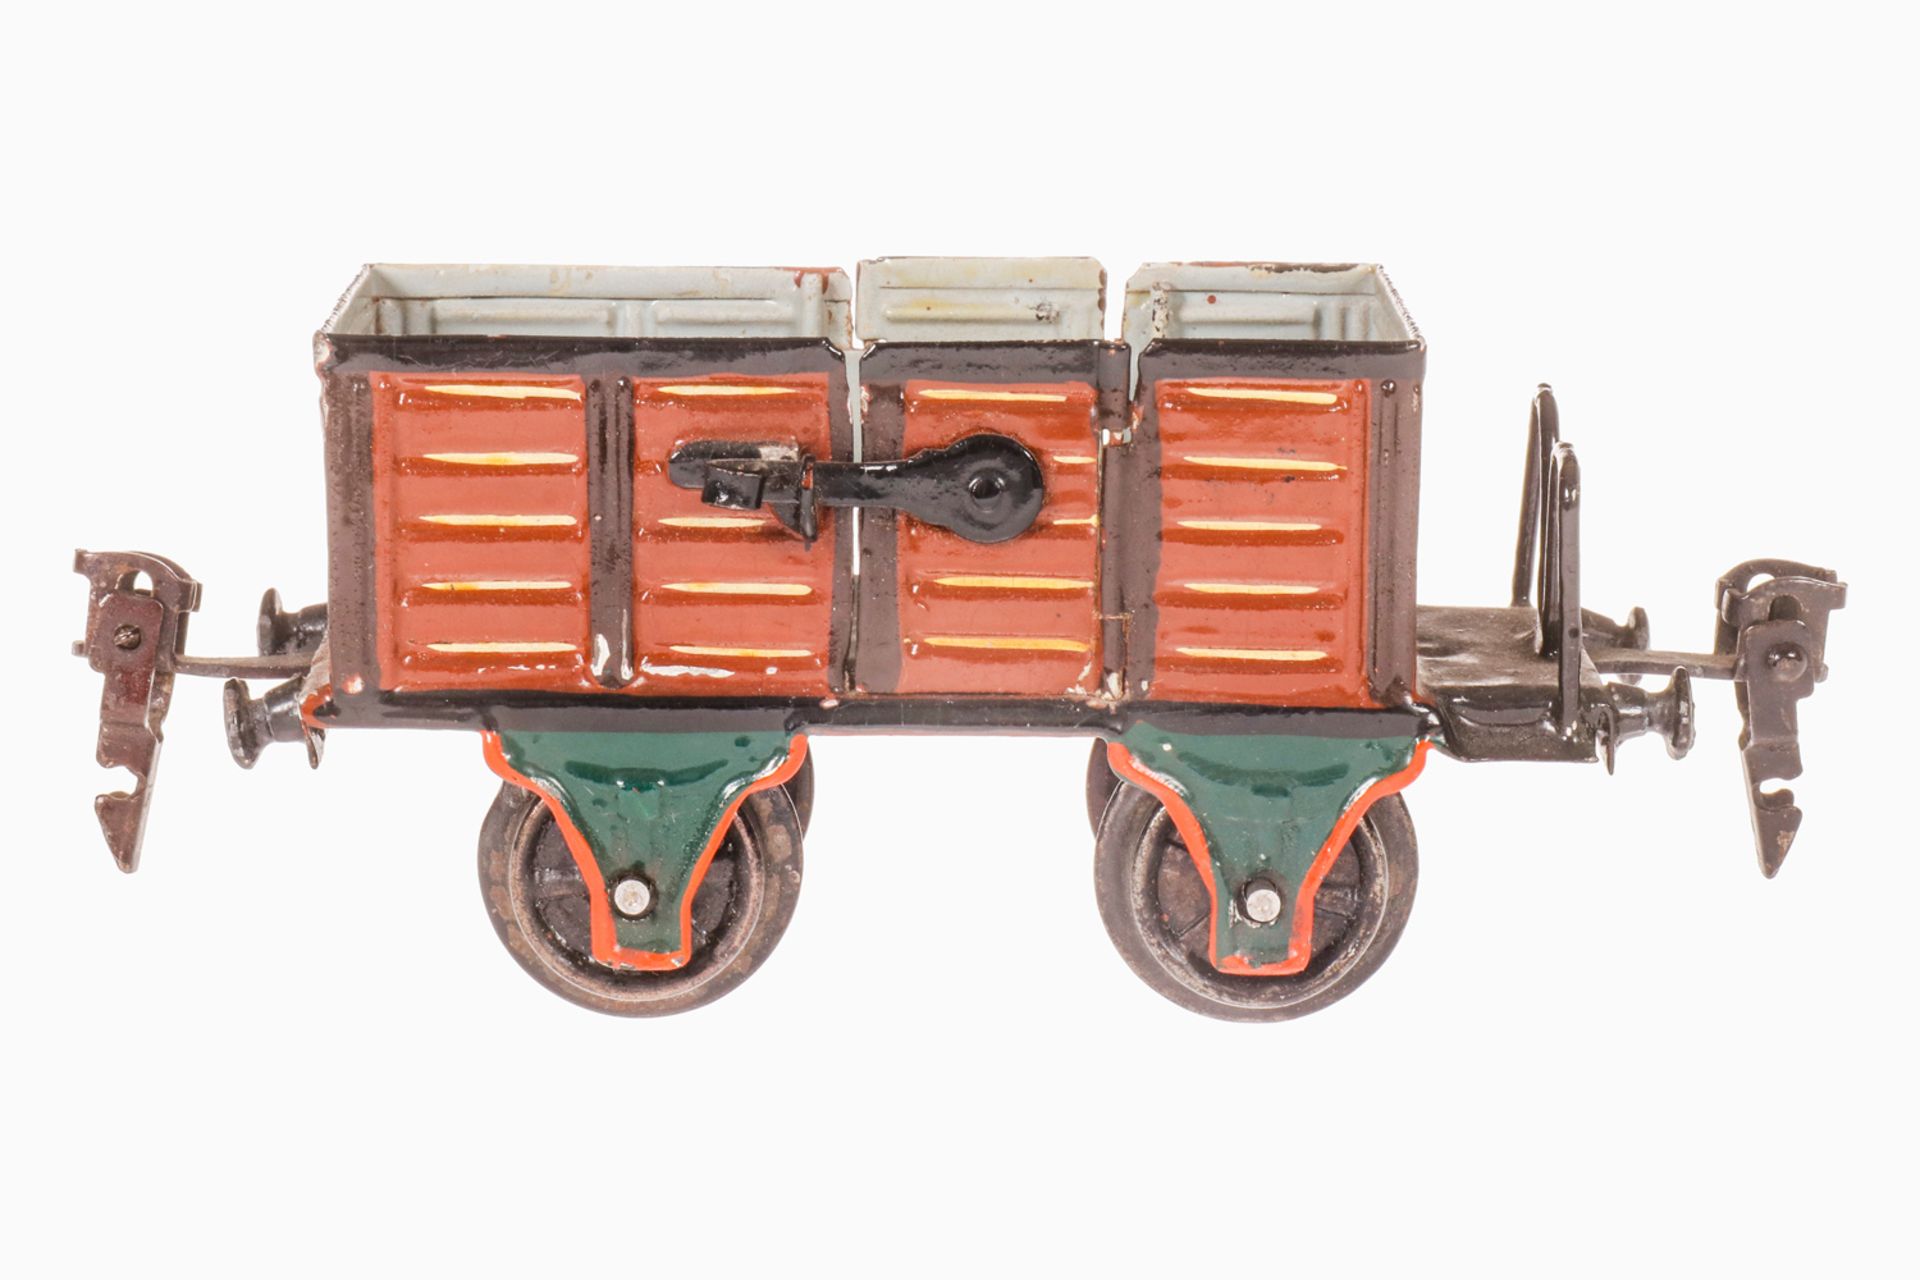 Märklin offener Güterwagen 1889, S 0, uralt, handlackiert, 2 LT mit Hakenverschluss, L 12,5, Z 1